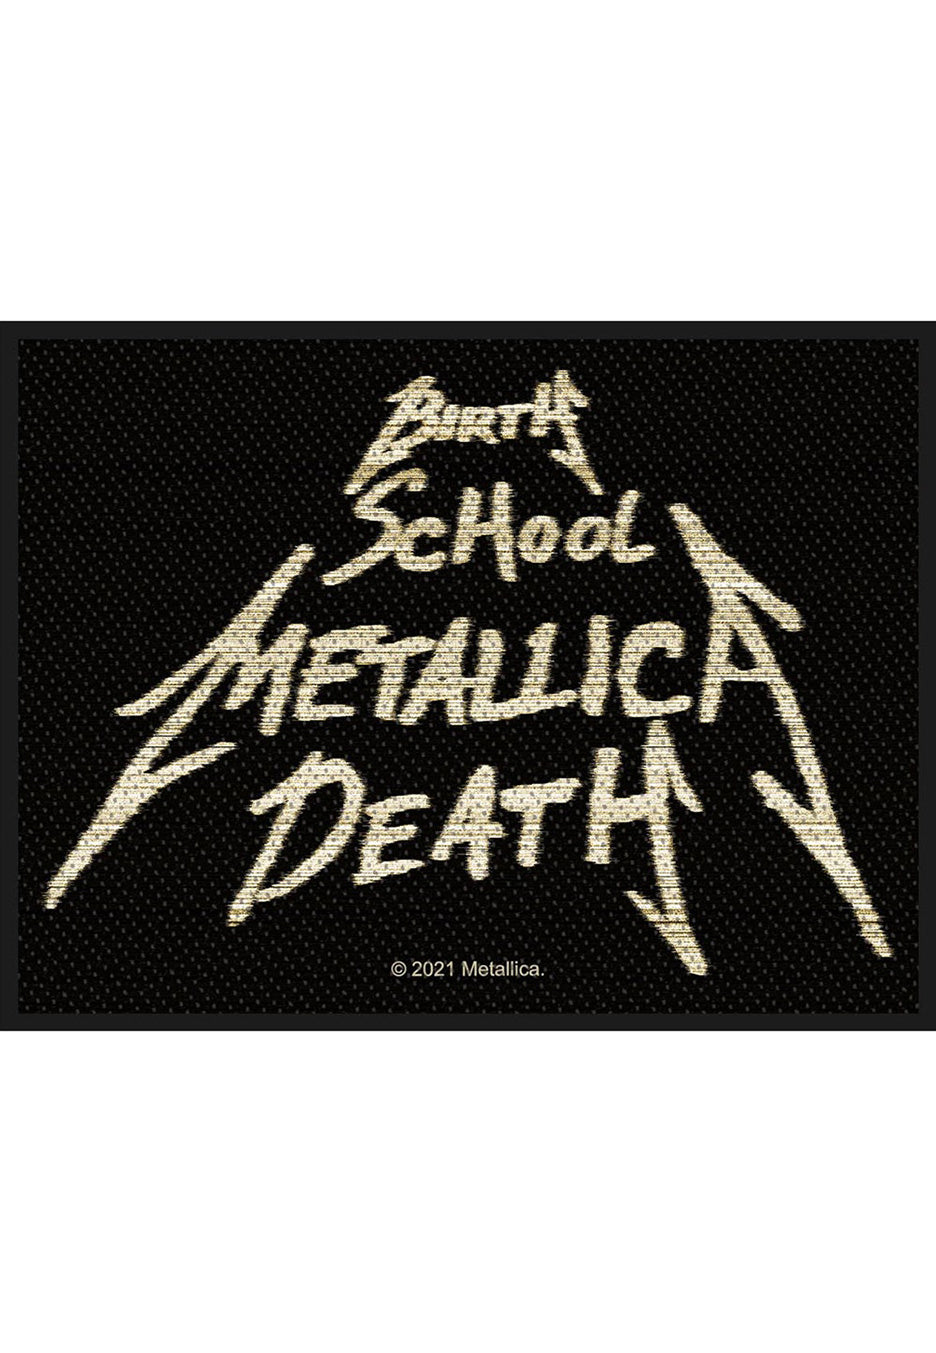 Metallica - Birth, School, Metallica, Death - Patch